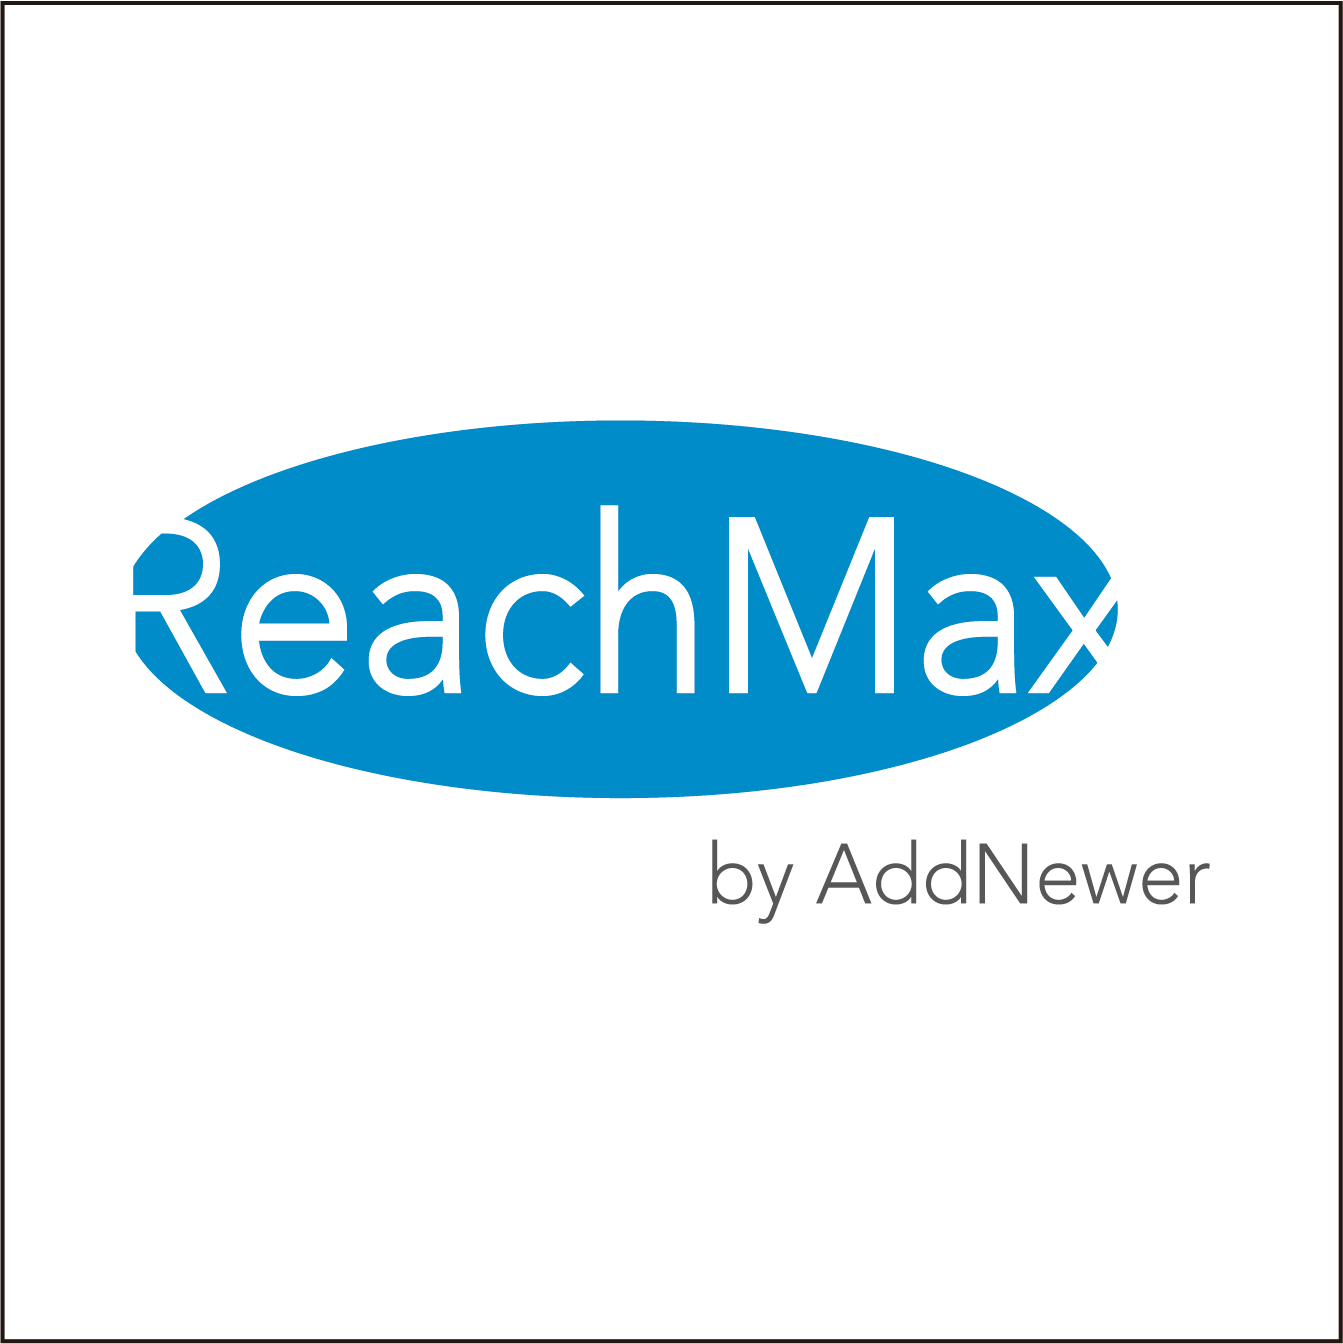 ReachMax